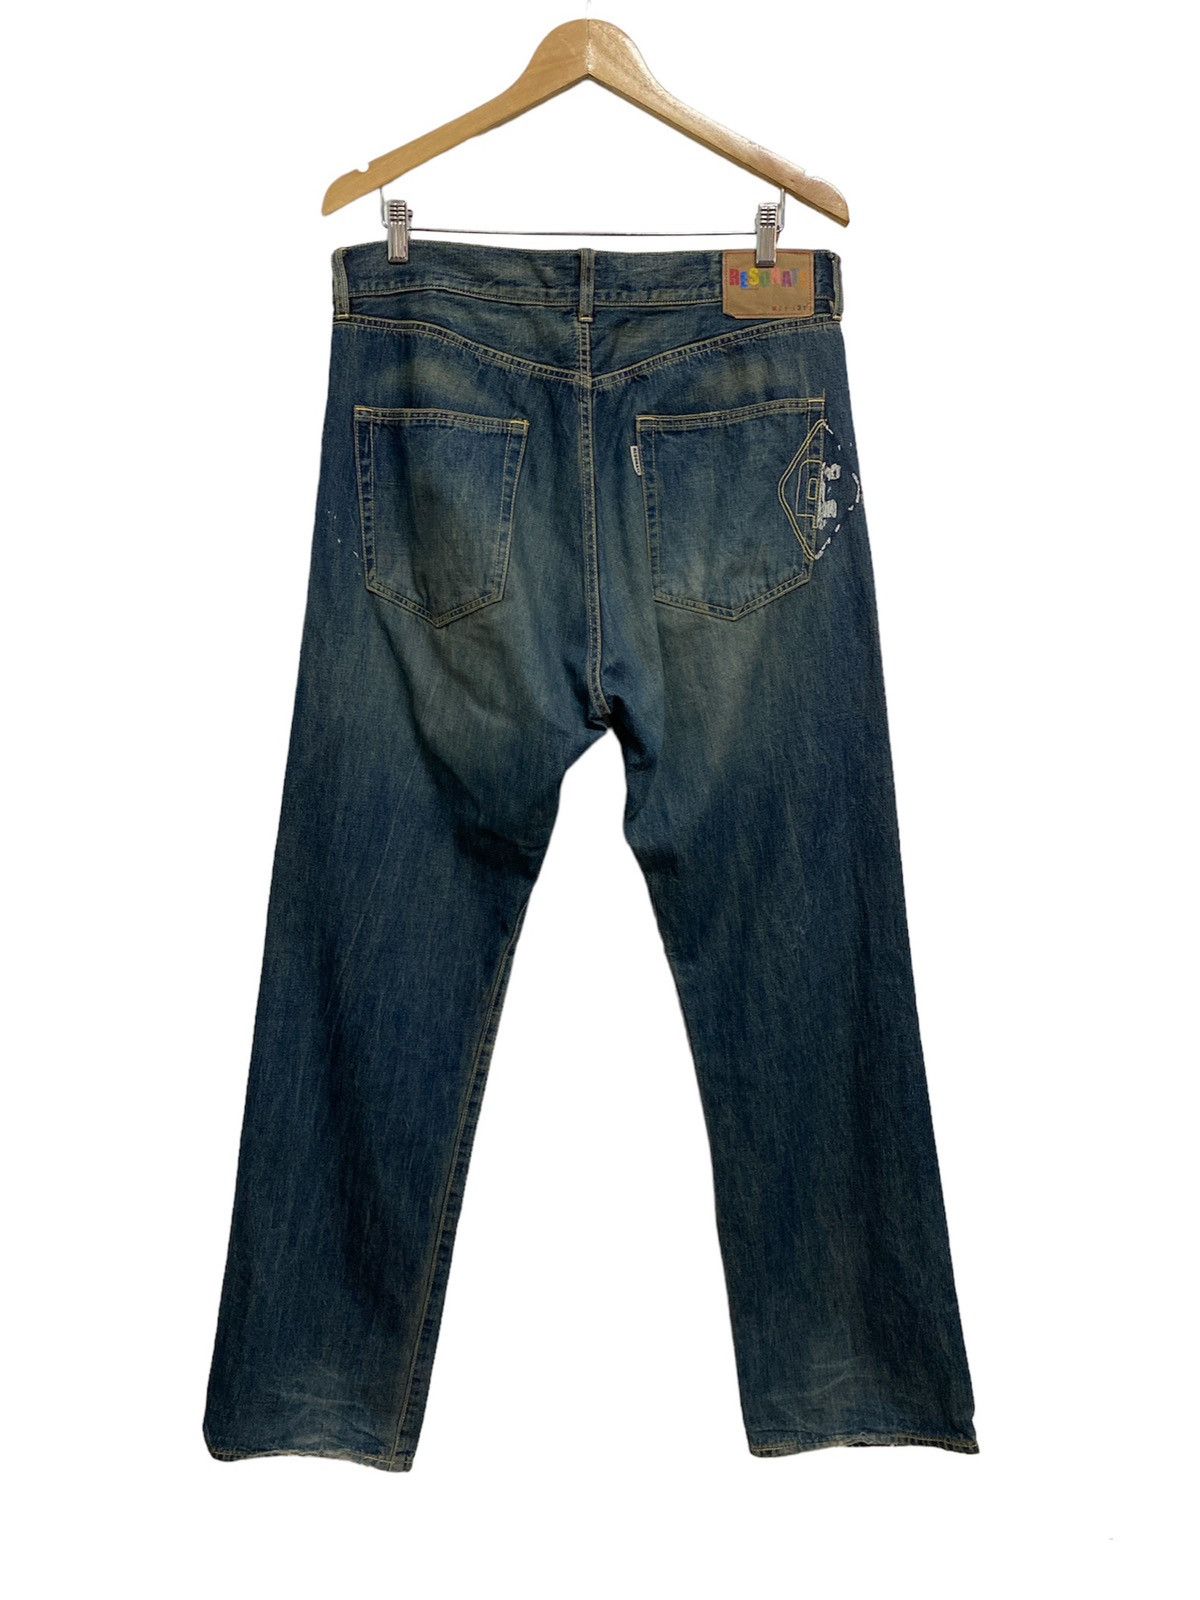 Goodenough - Good Enough Resonate Selvedge Denim Jeans - 8